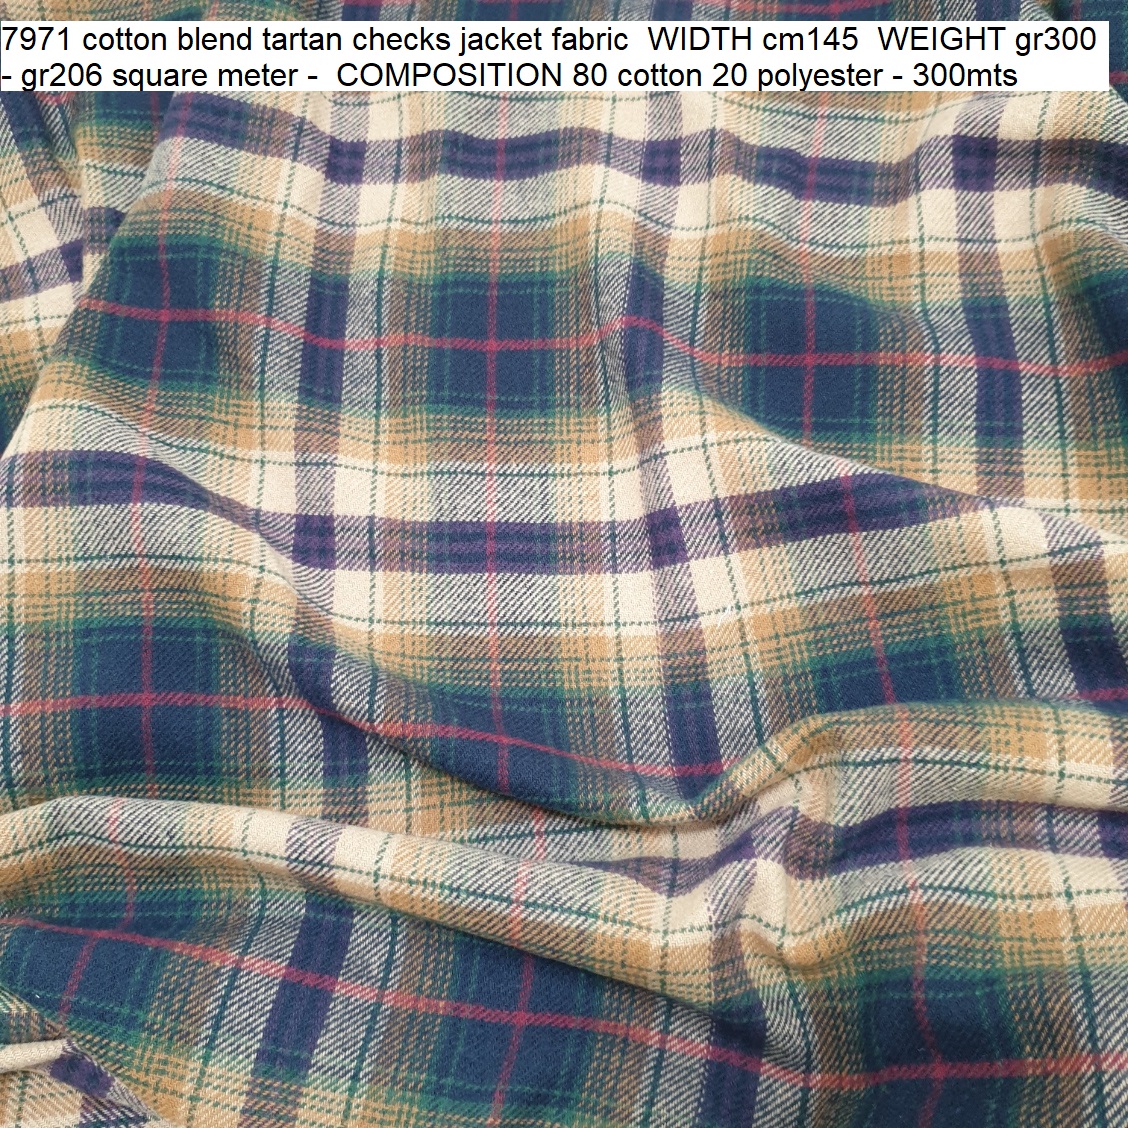 7971 cotton blend tartan checks jacket fabric WIDTH cm145 WEIGHT gr300 - gr206 square meter - COMPOSITION 80 cotton 20 polyester - 300mts